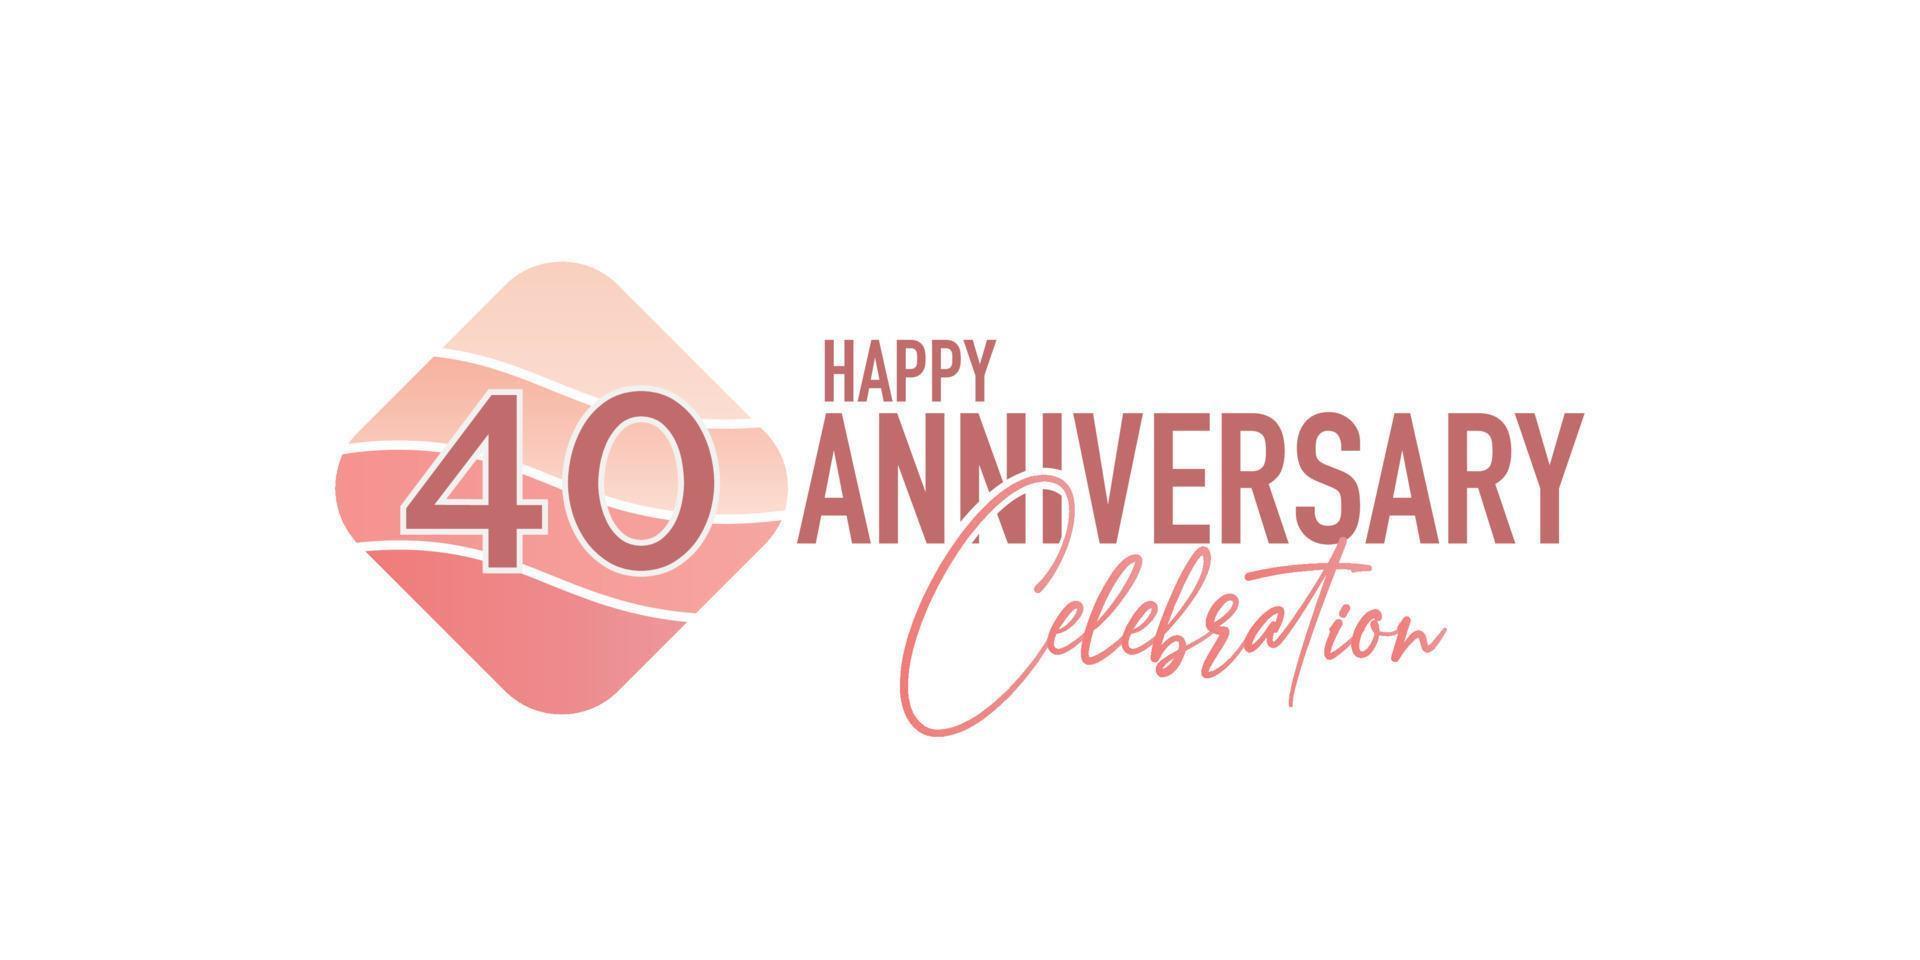 40 years anniversary logo vector illustration design celebration with pink geometric design